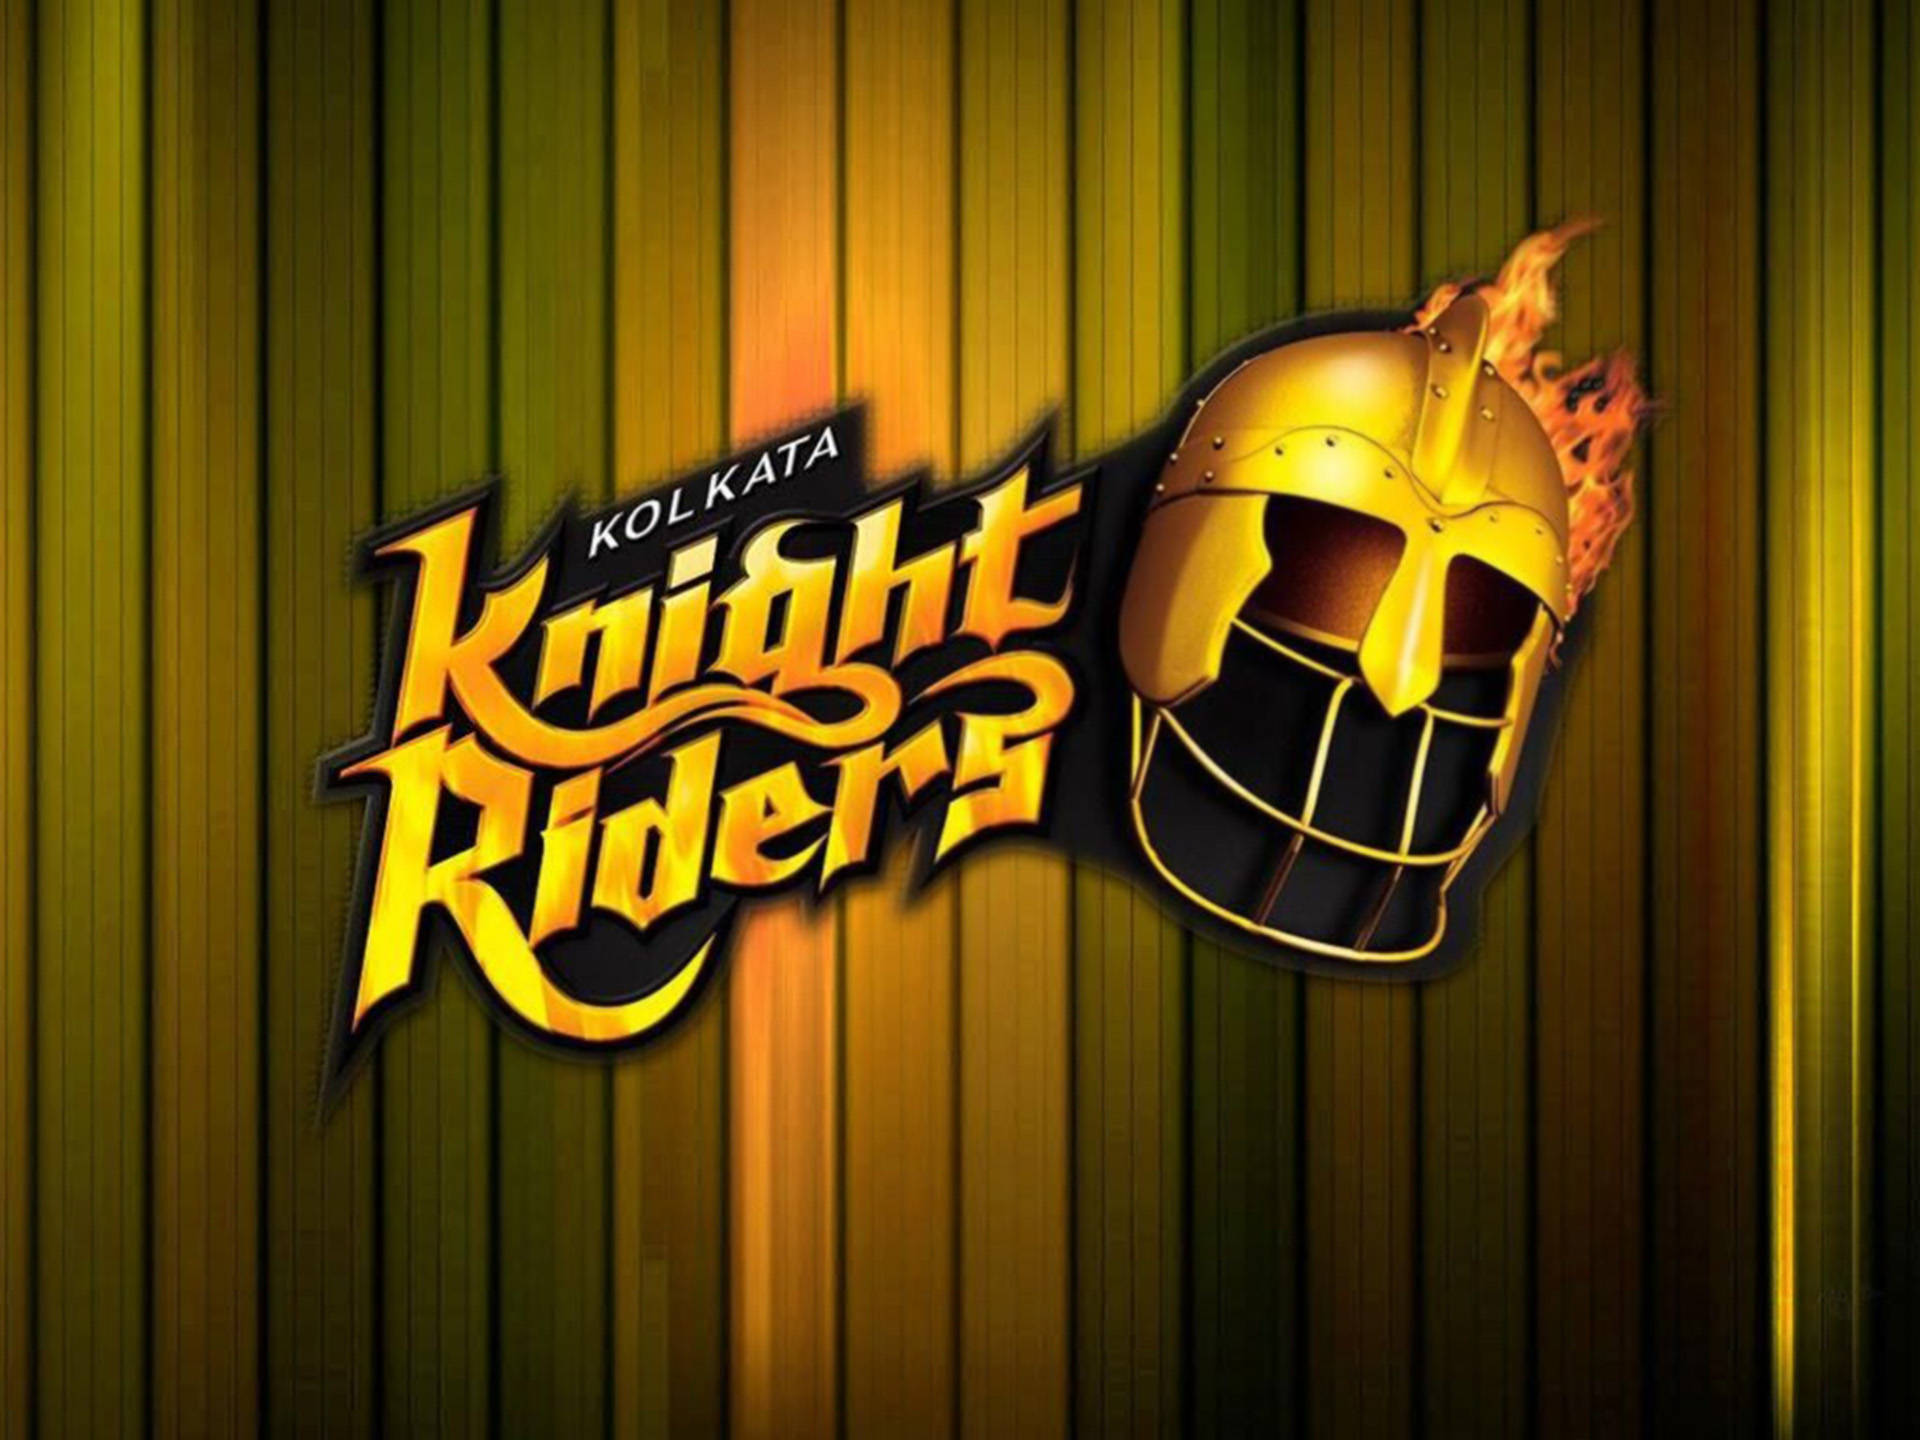 Kolkata Knight Riders Wood Texture Background